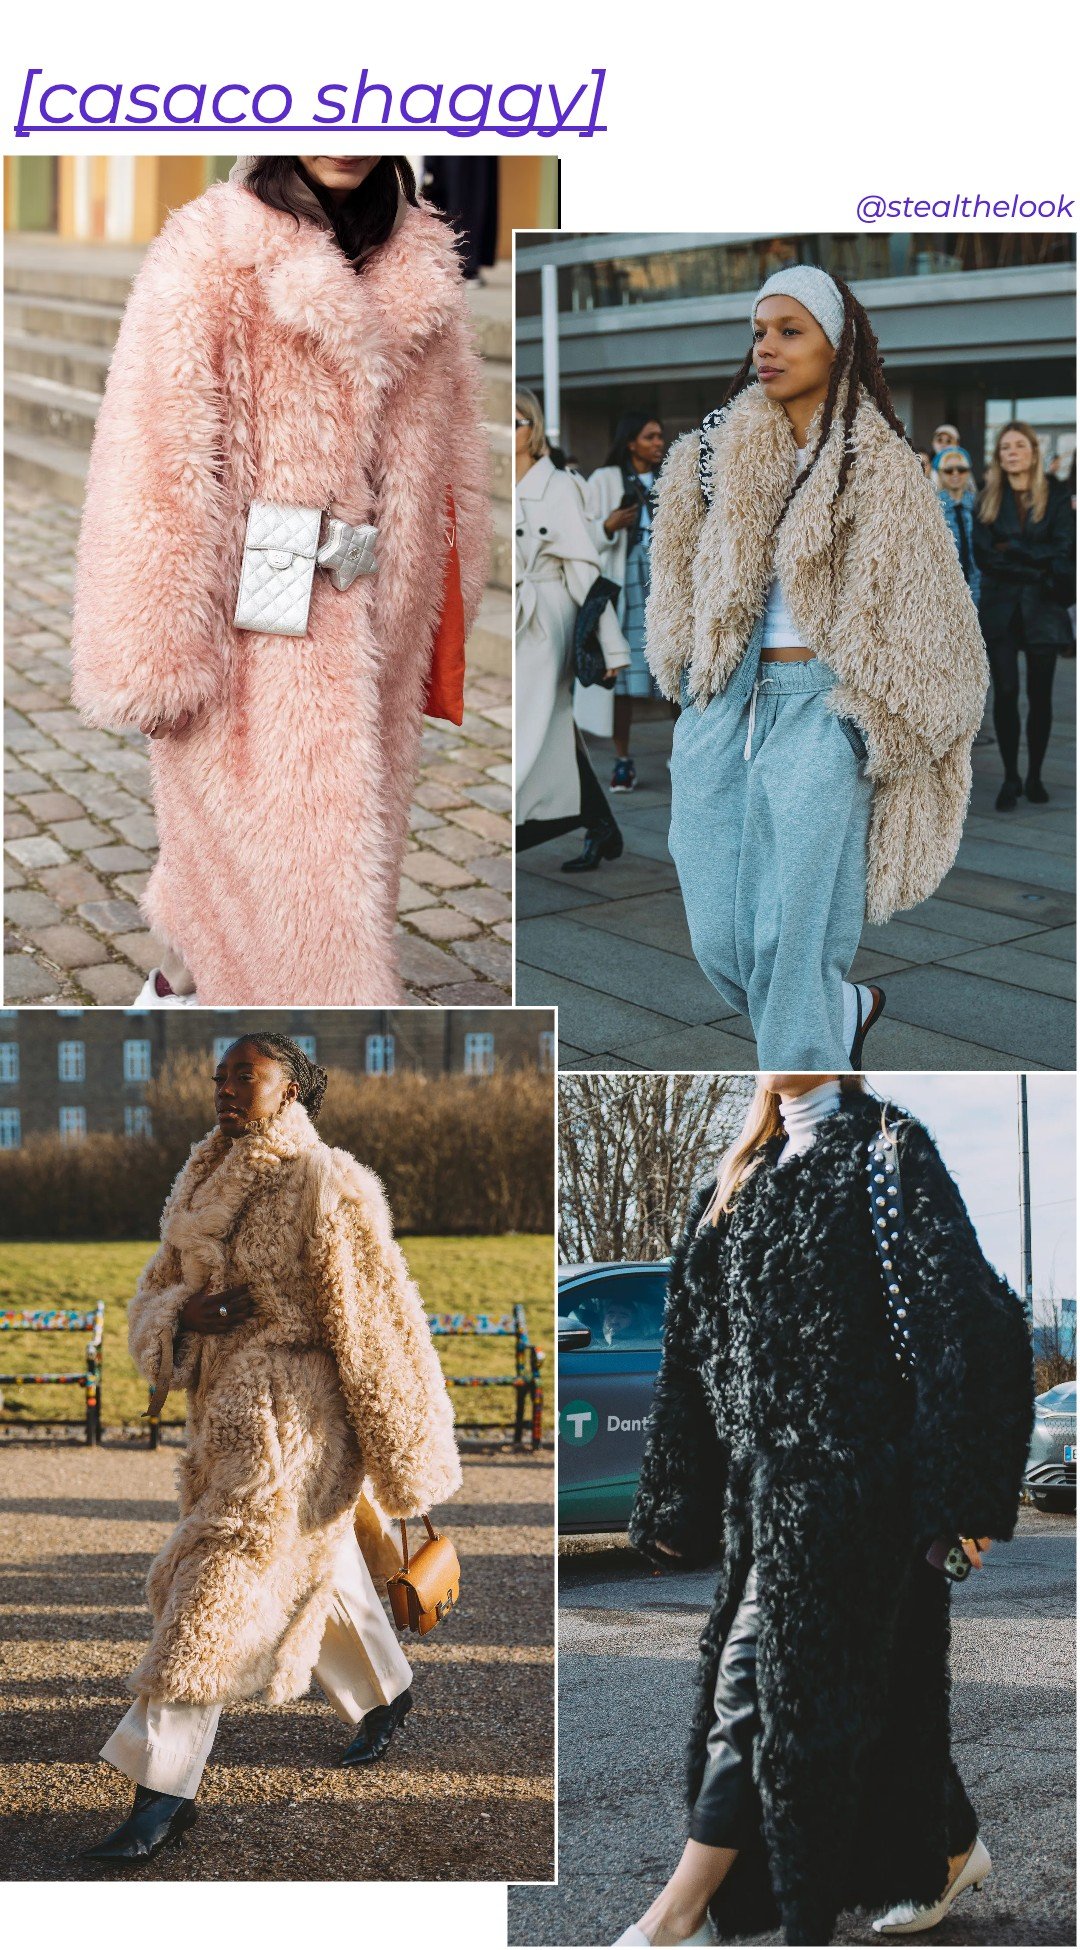 Casaco shaggy - Tendências do street style - Tendências do street style - Inverno - Copenhagen Fashion Week - https://stealthelook.com.br